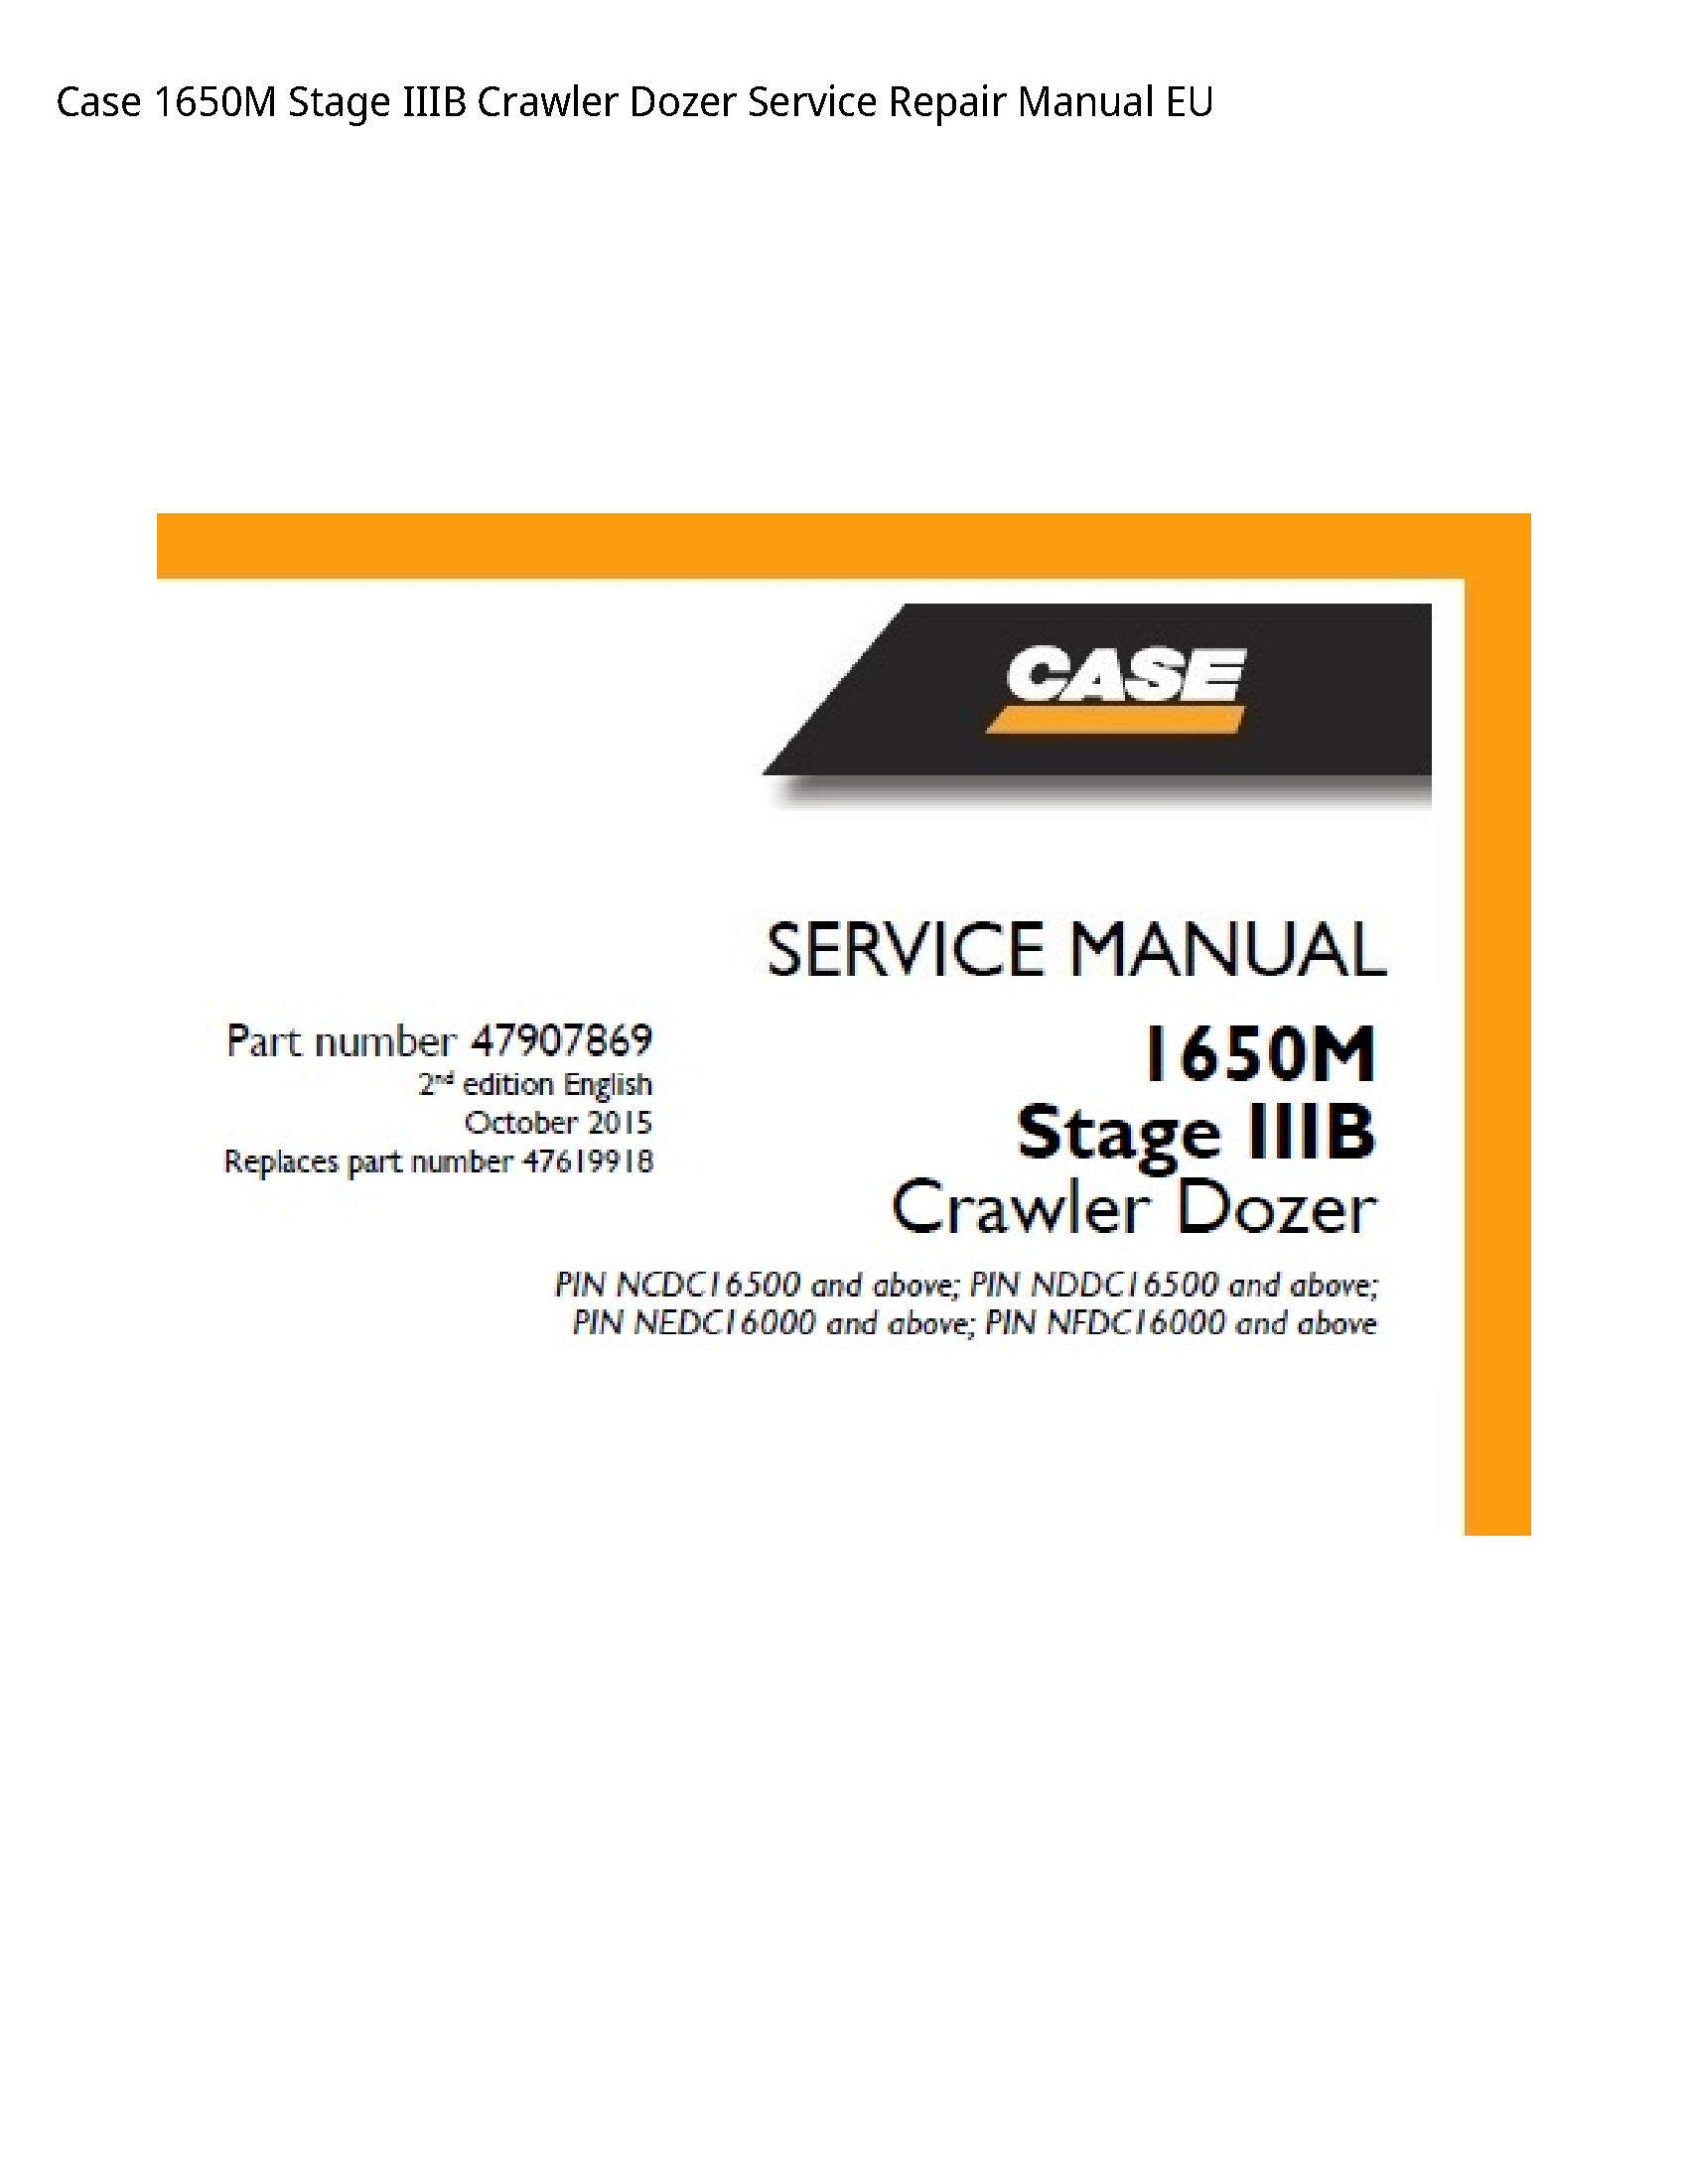 Case/Case IH 1650M Stage IIIB Crawler Dozer manual